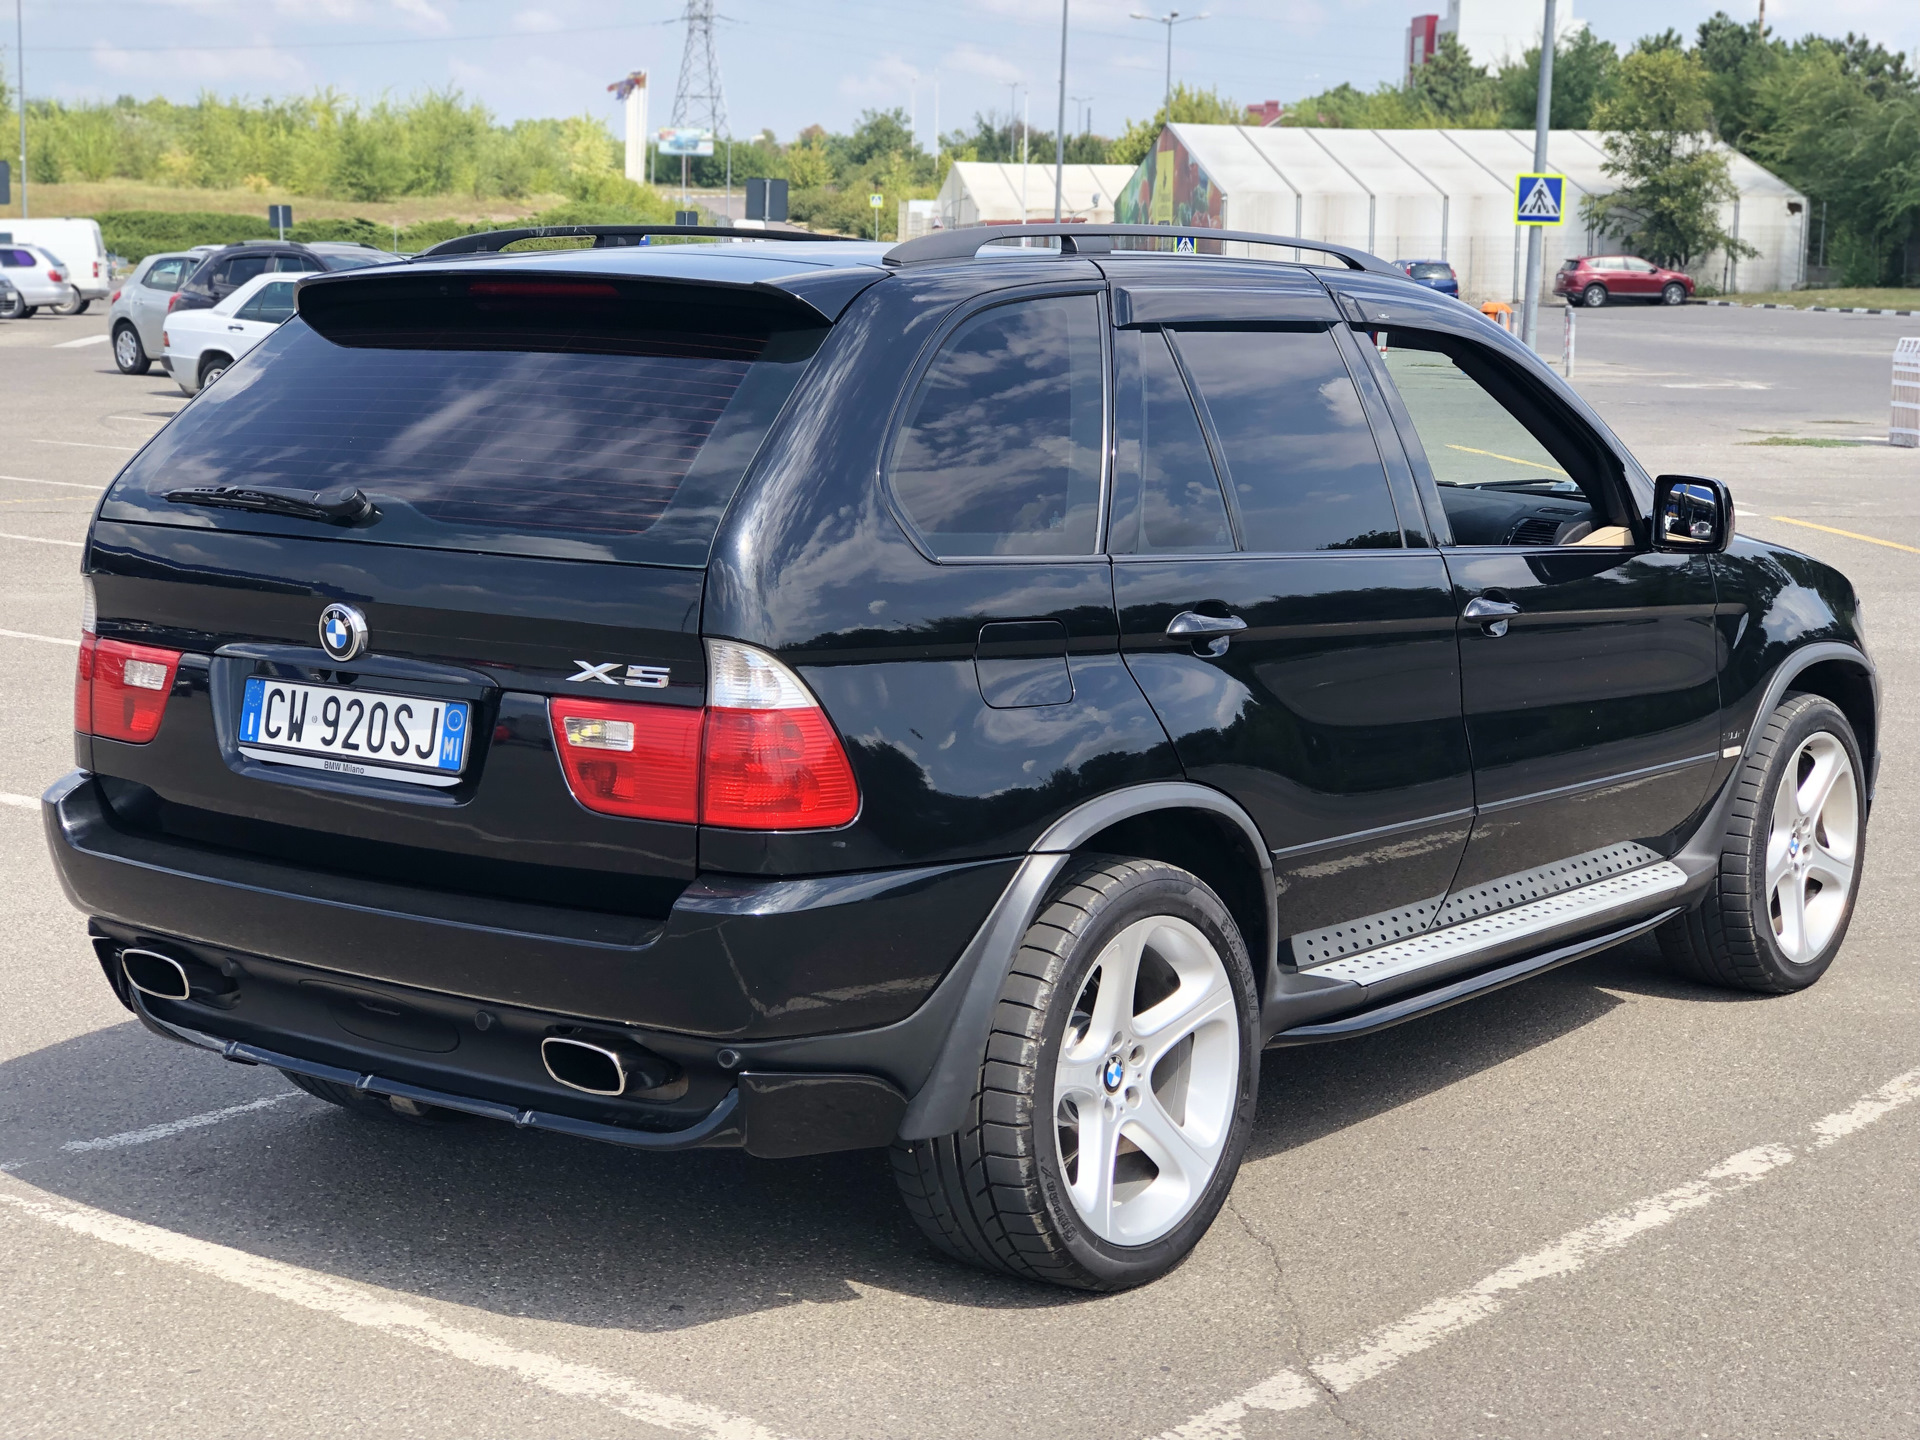 BMW x5 e53 4.8 Black